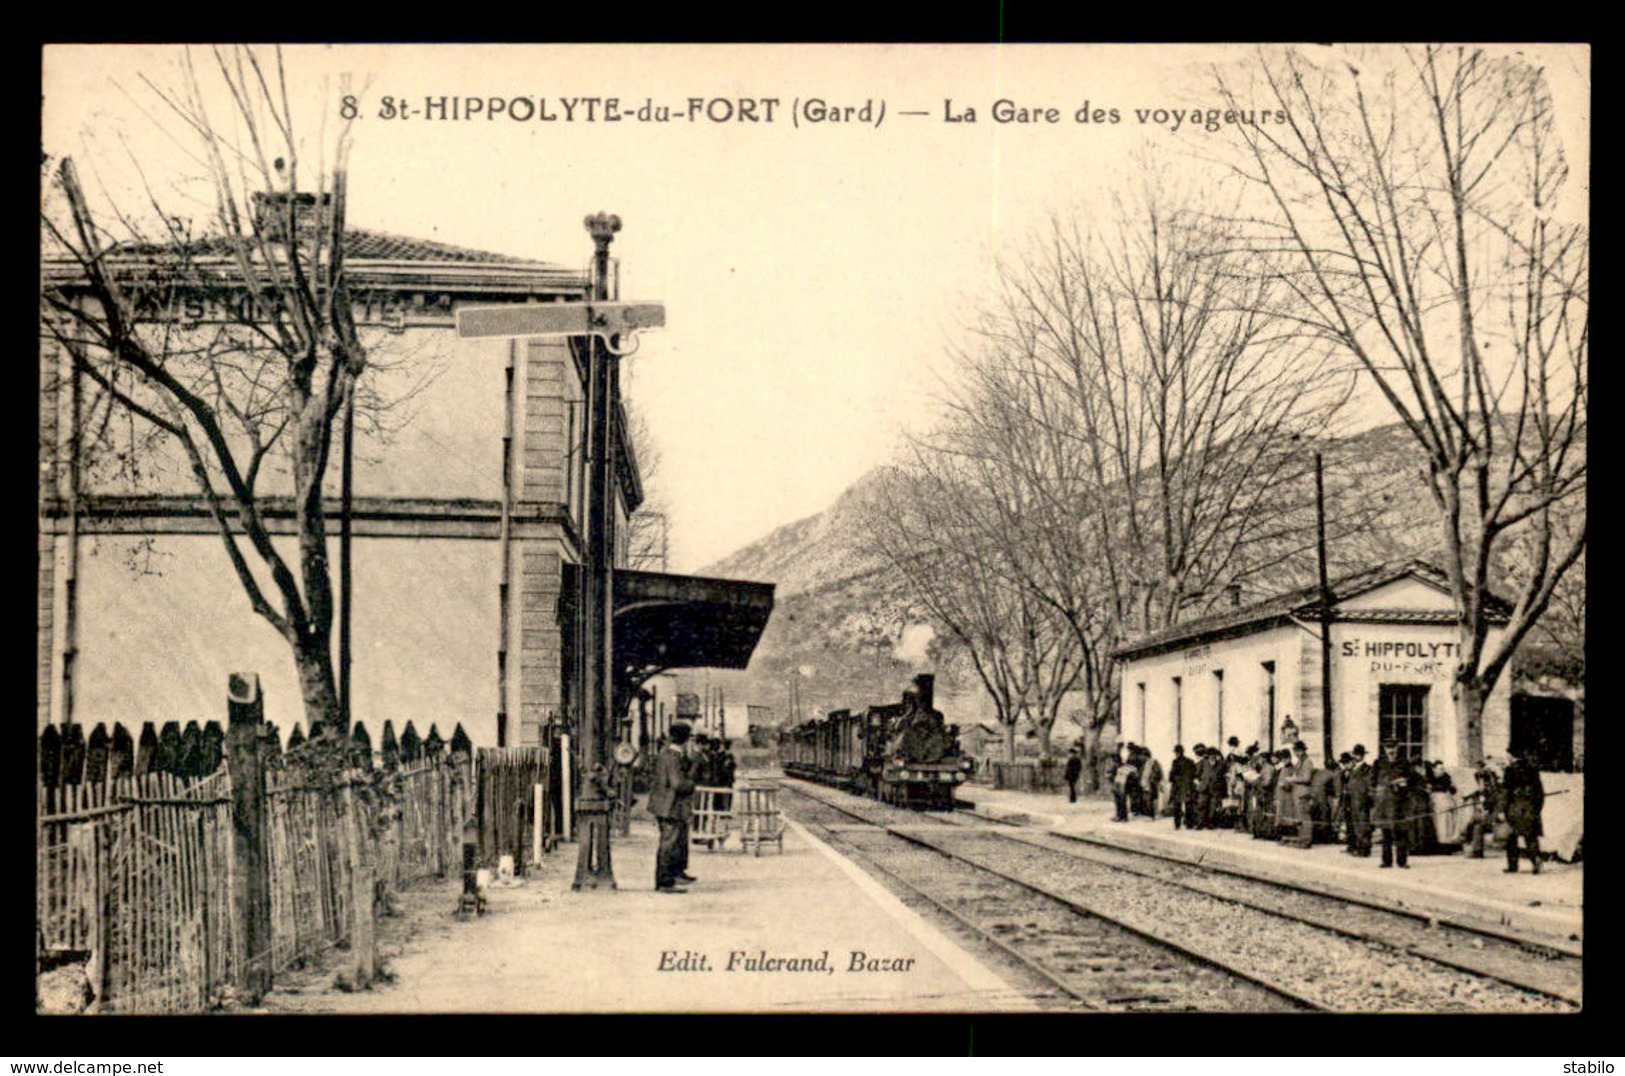 Gare de St Hipollythe.jpg